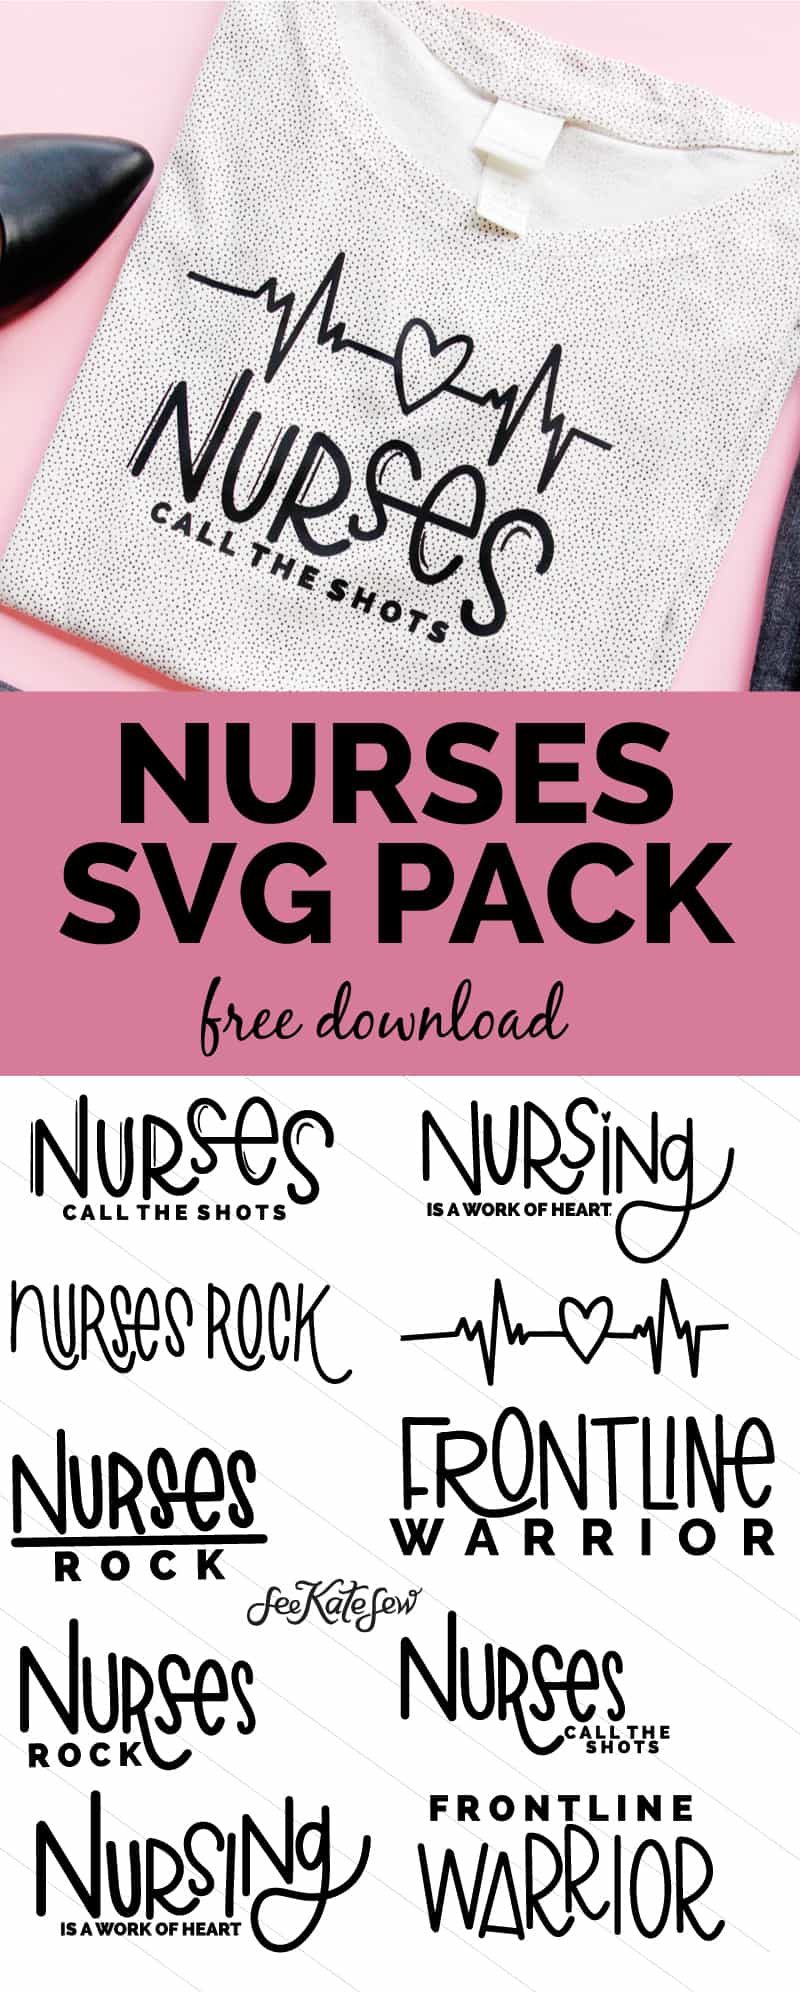 Nurses SVG Design Pack | National Nurses Week